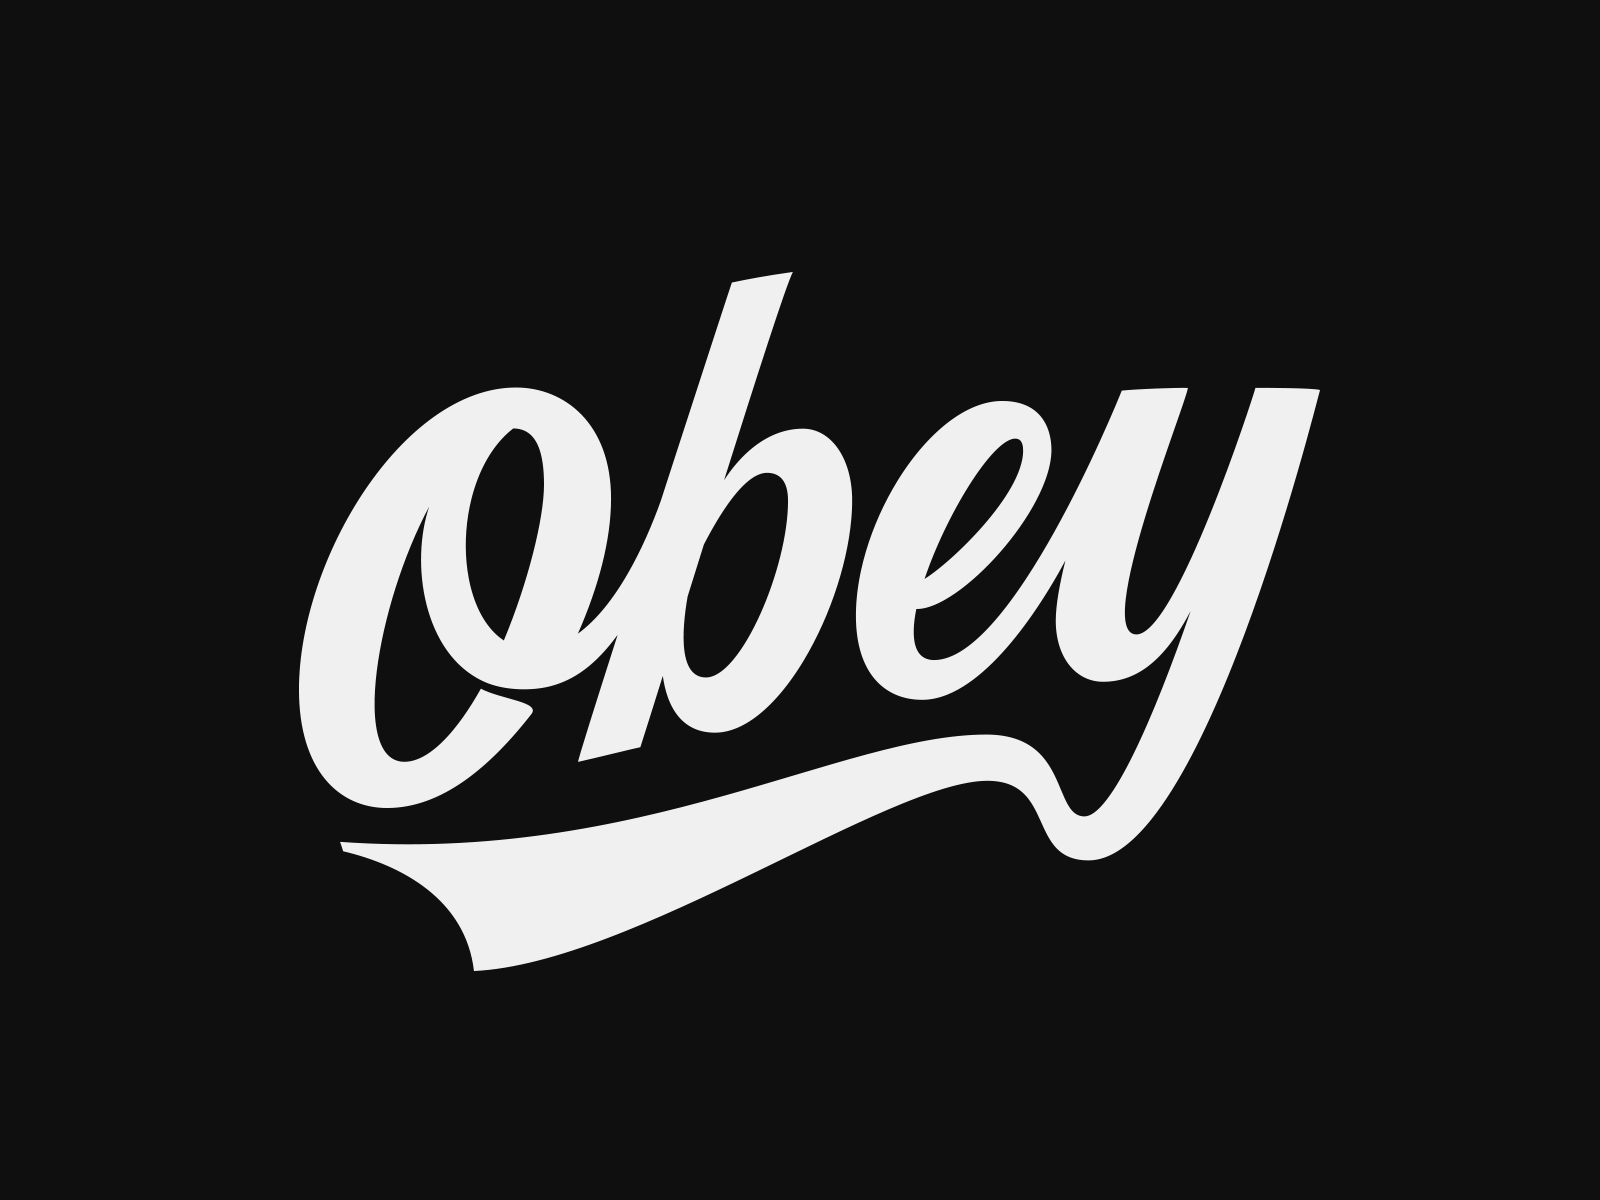 cool obey logos